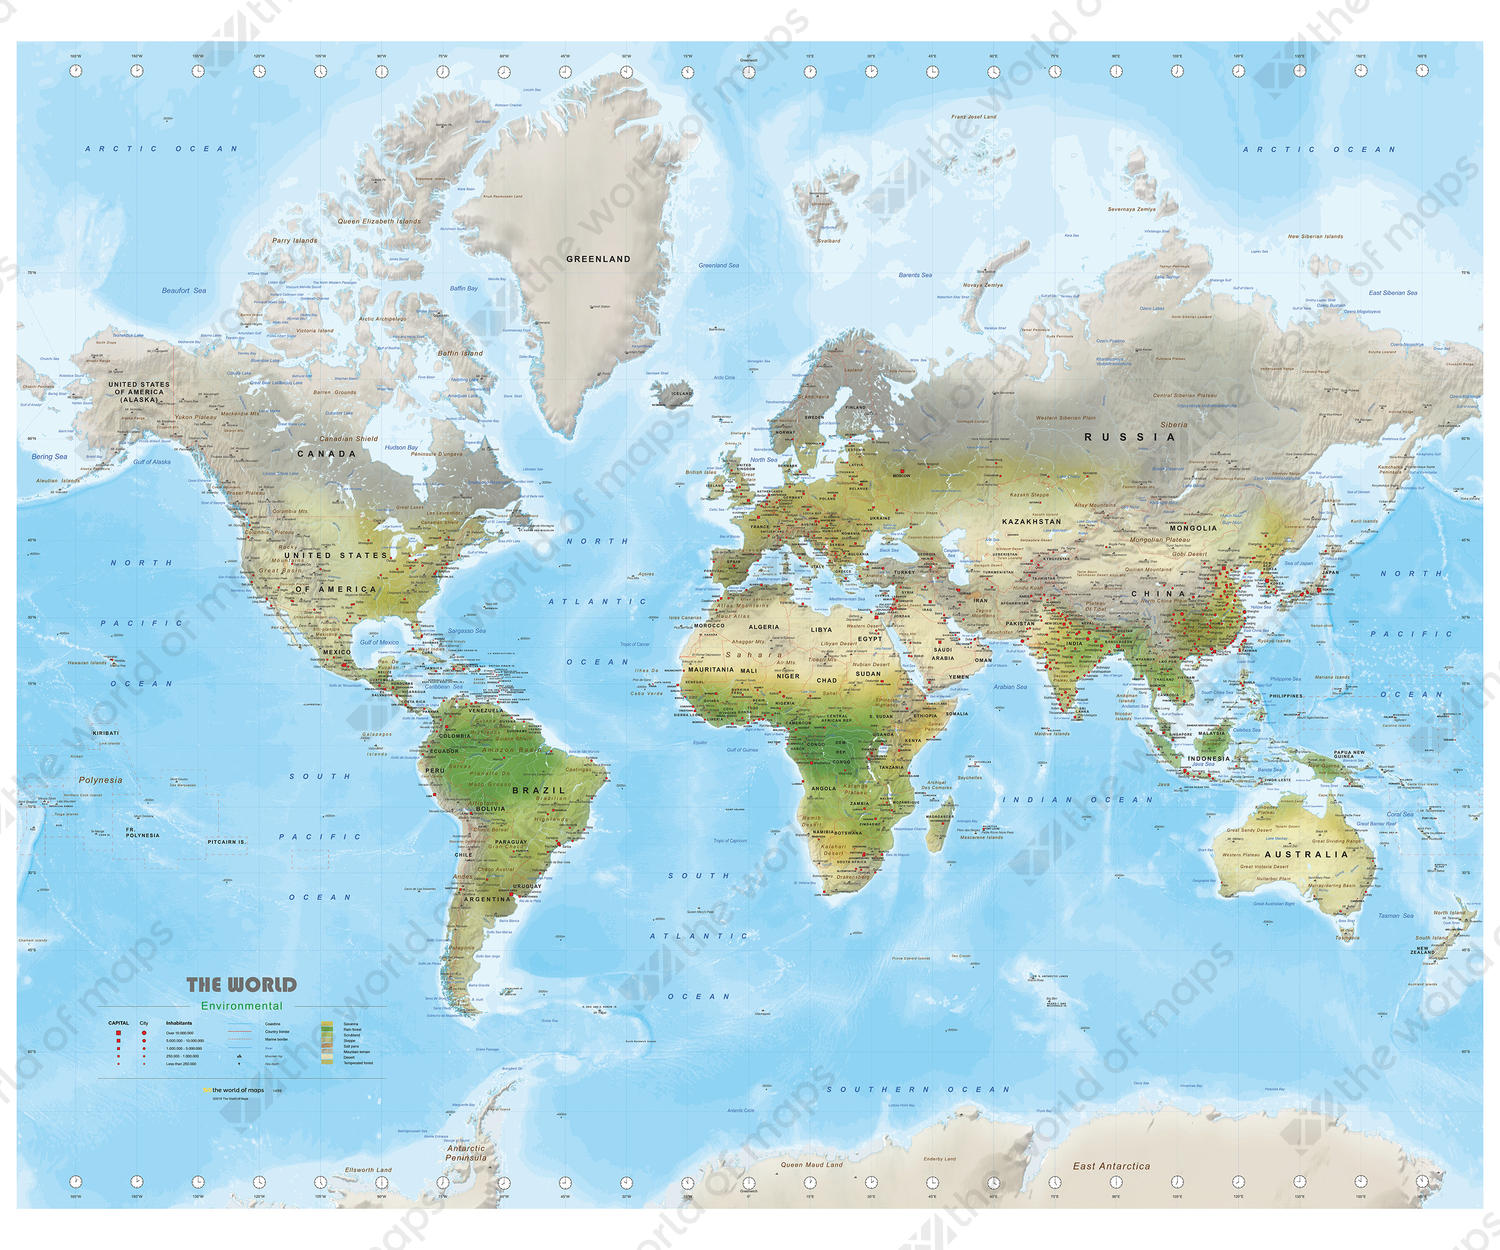 Digital environmental map of The World medium 1499